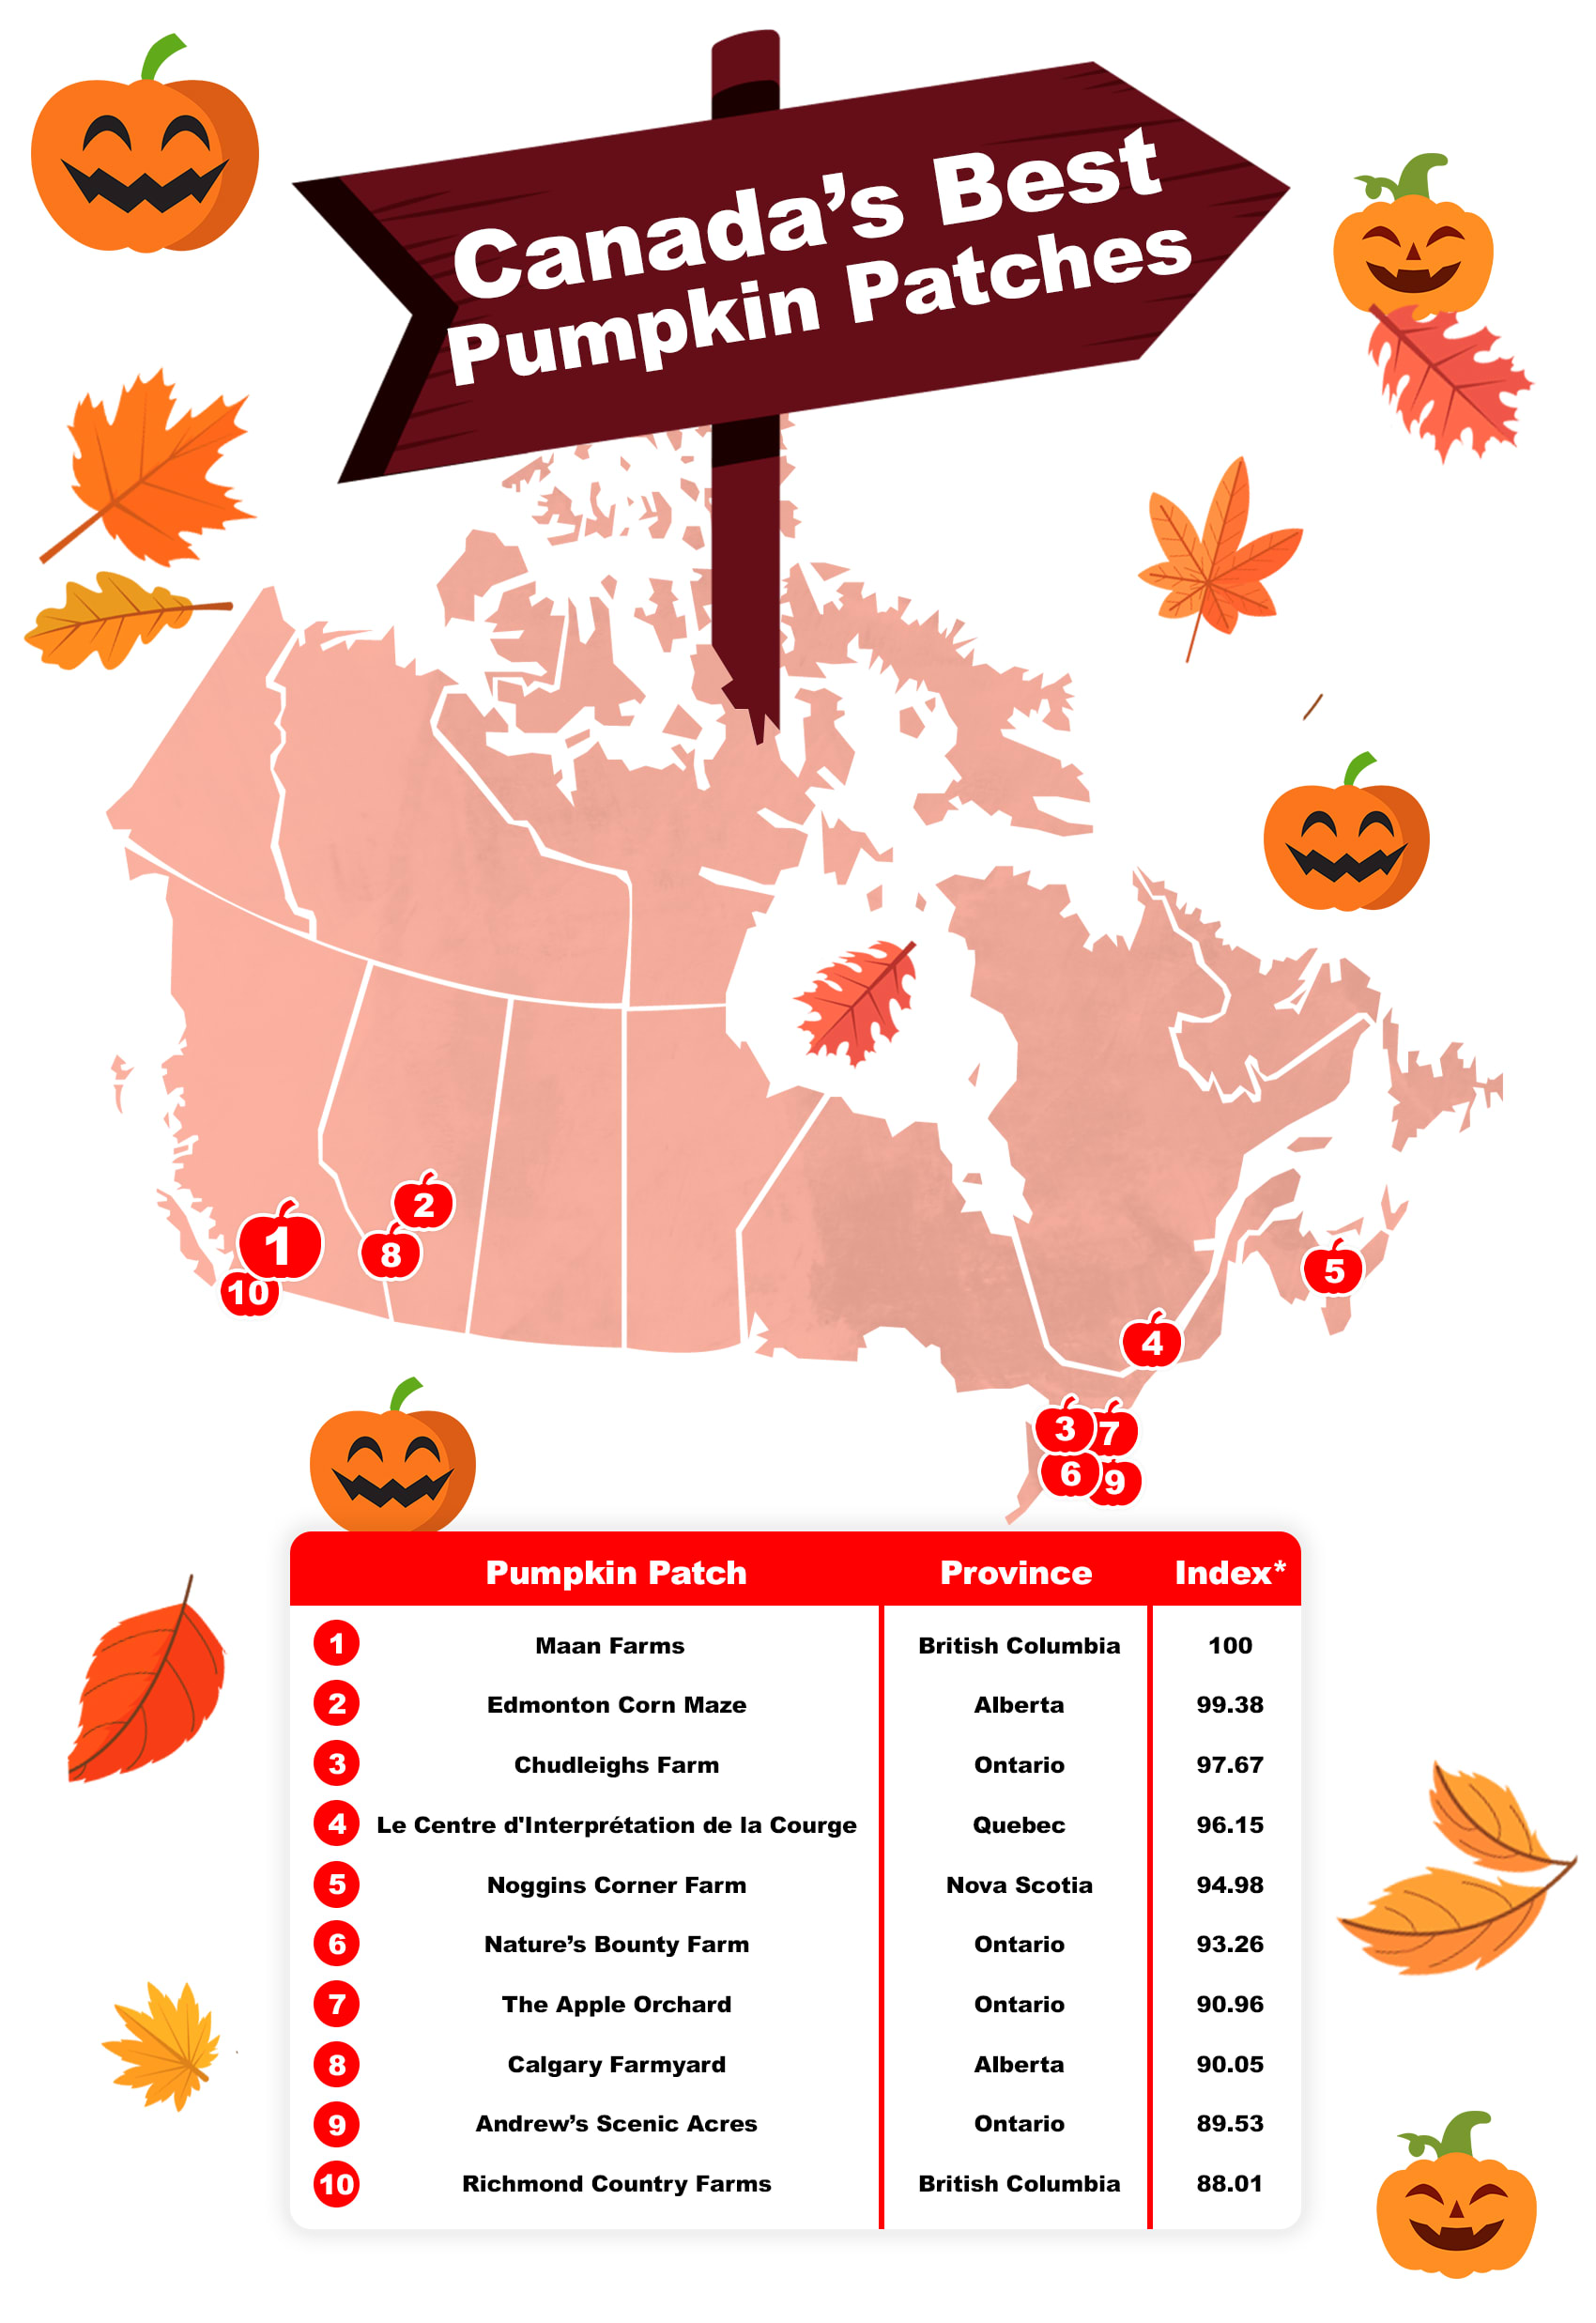 <h2>Canada’s Top 20 Pumpkin Patches</h2>